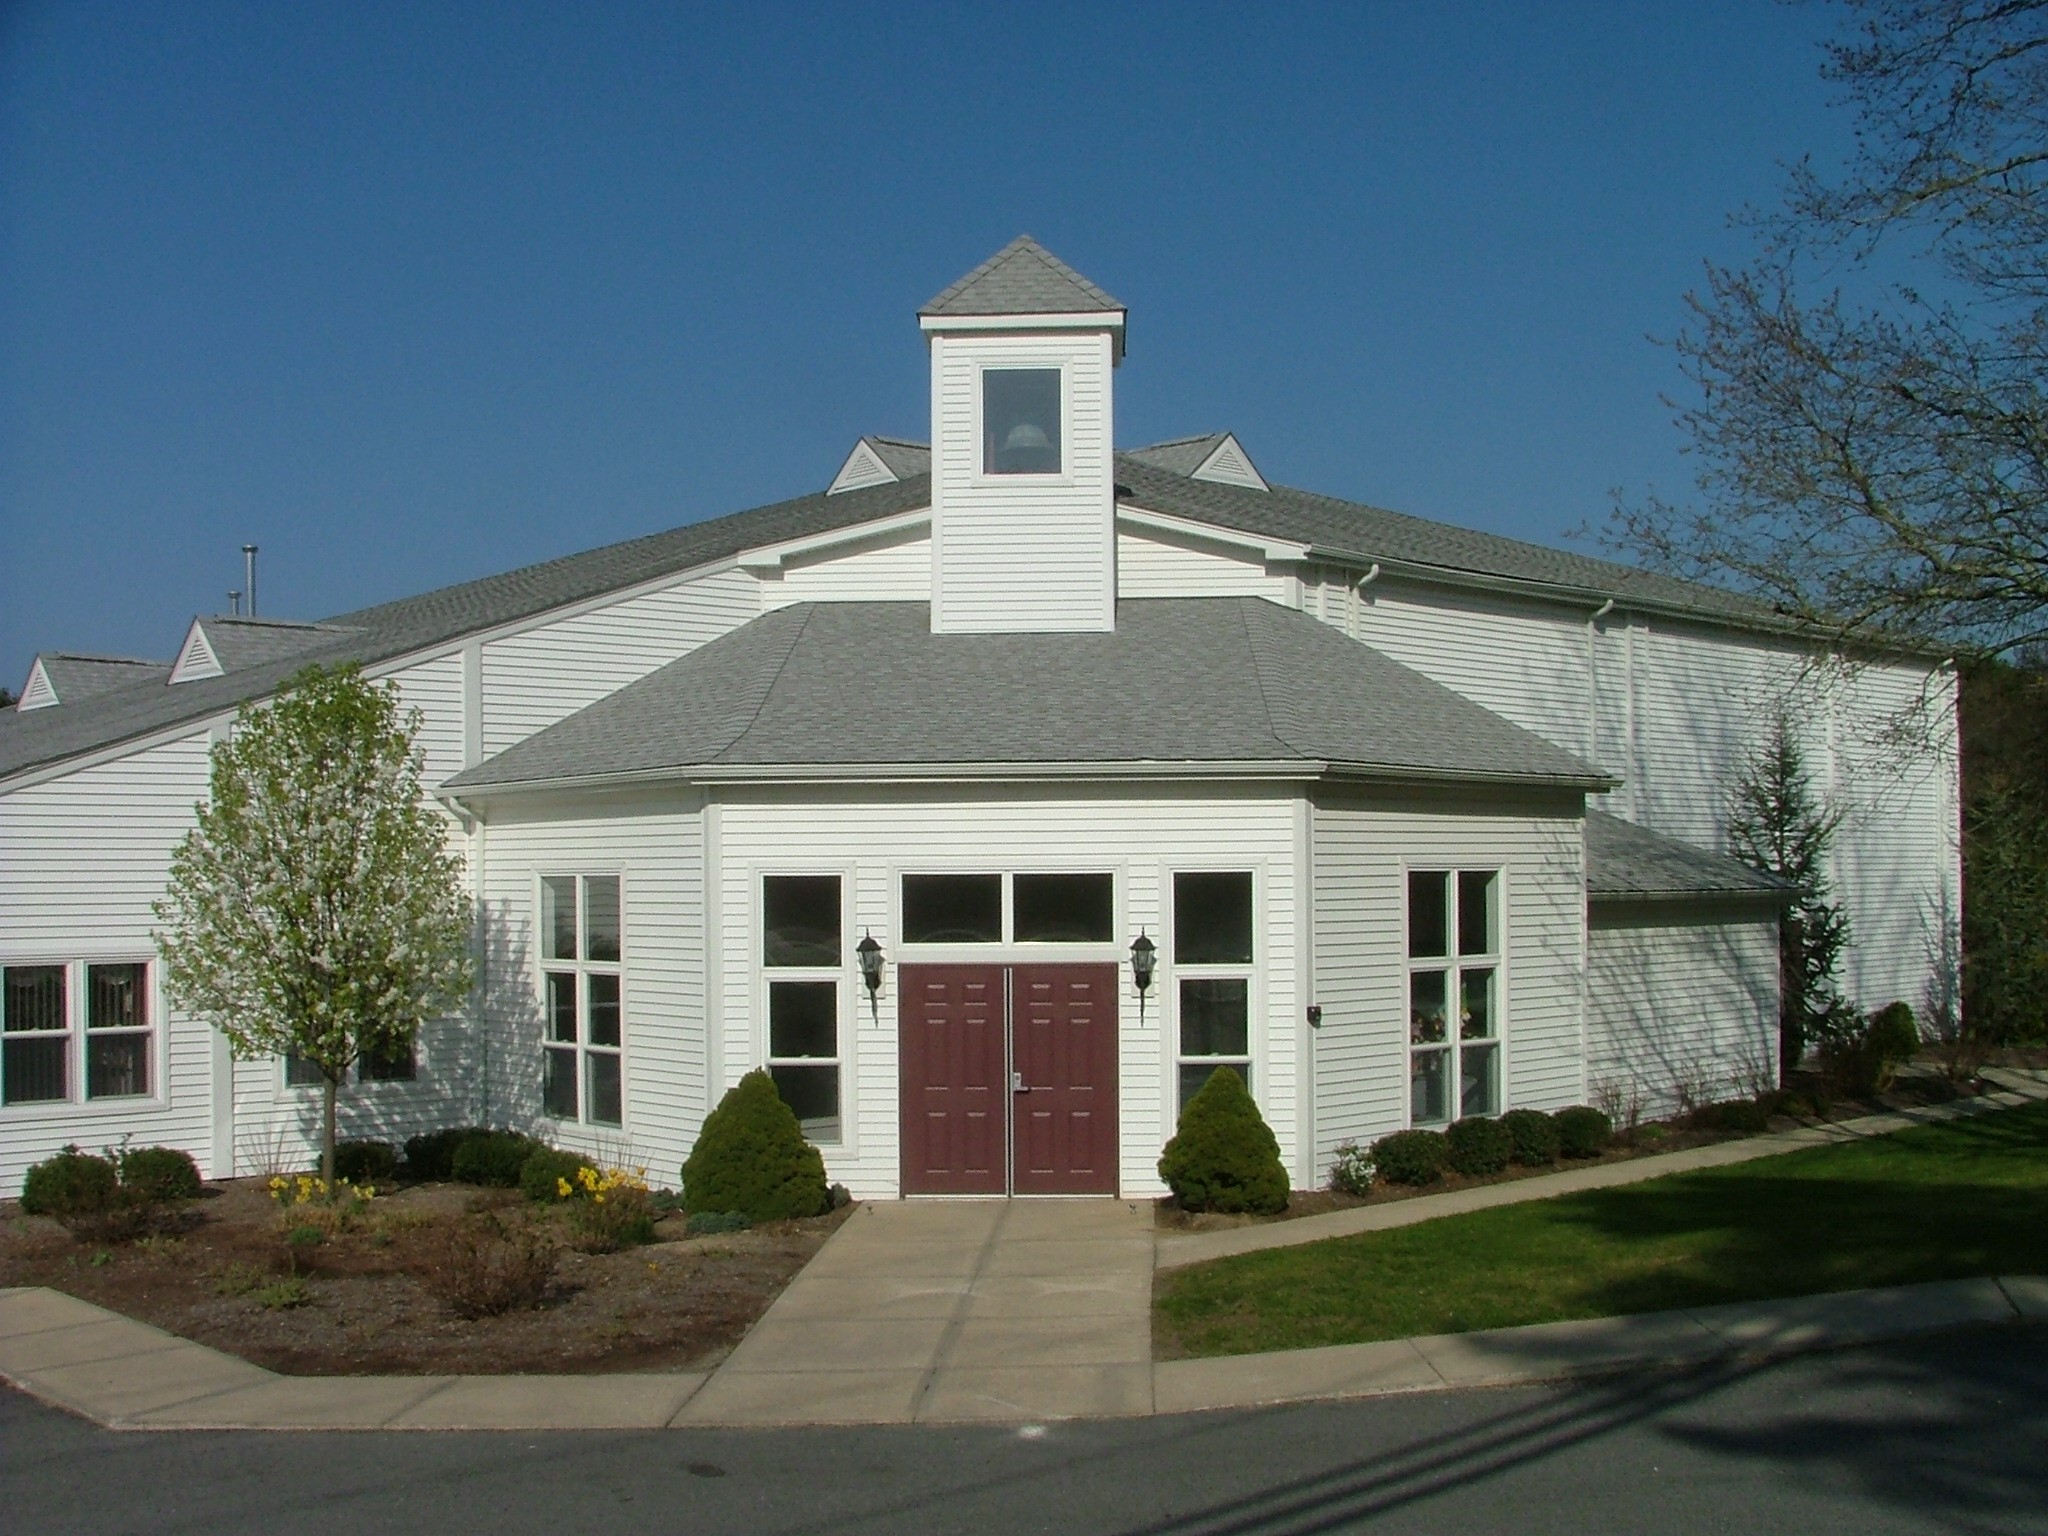 The New Testament Church of Cedarville